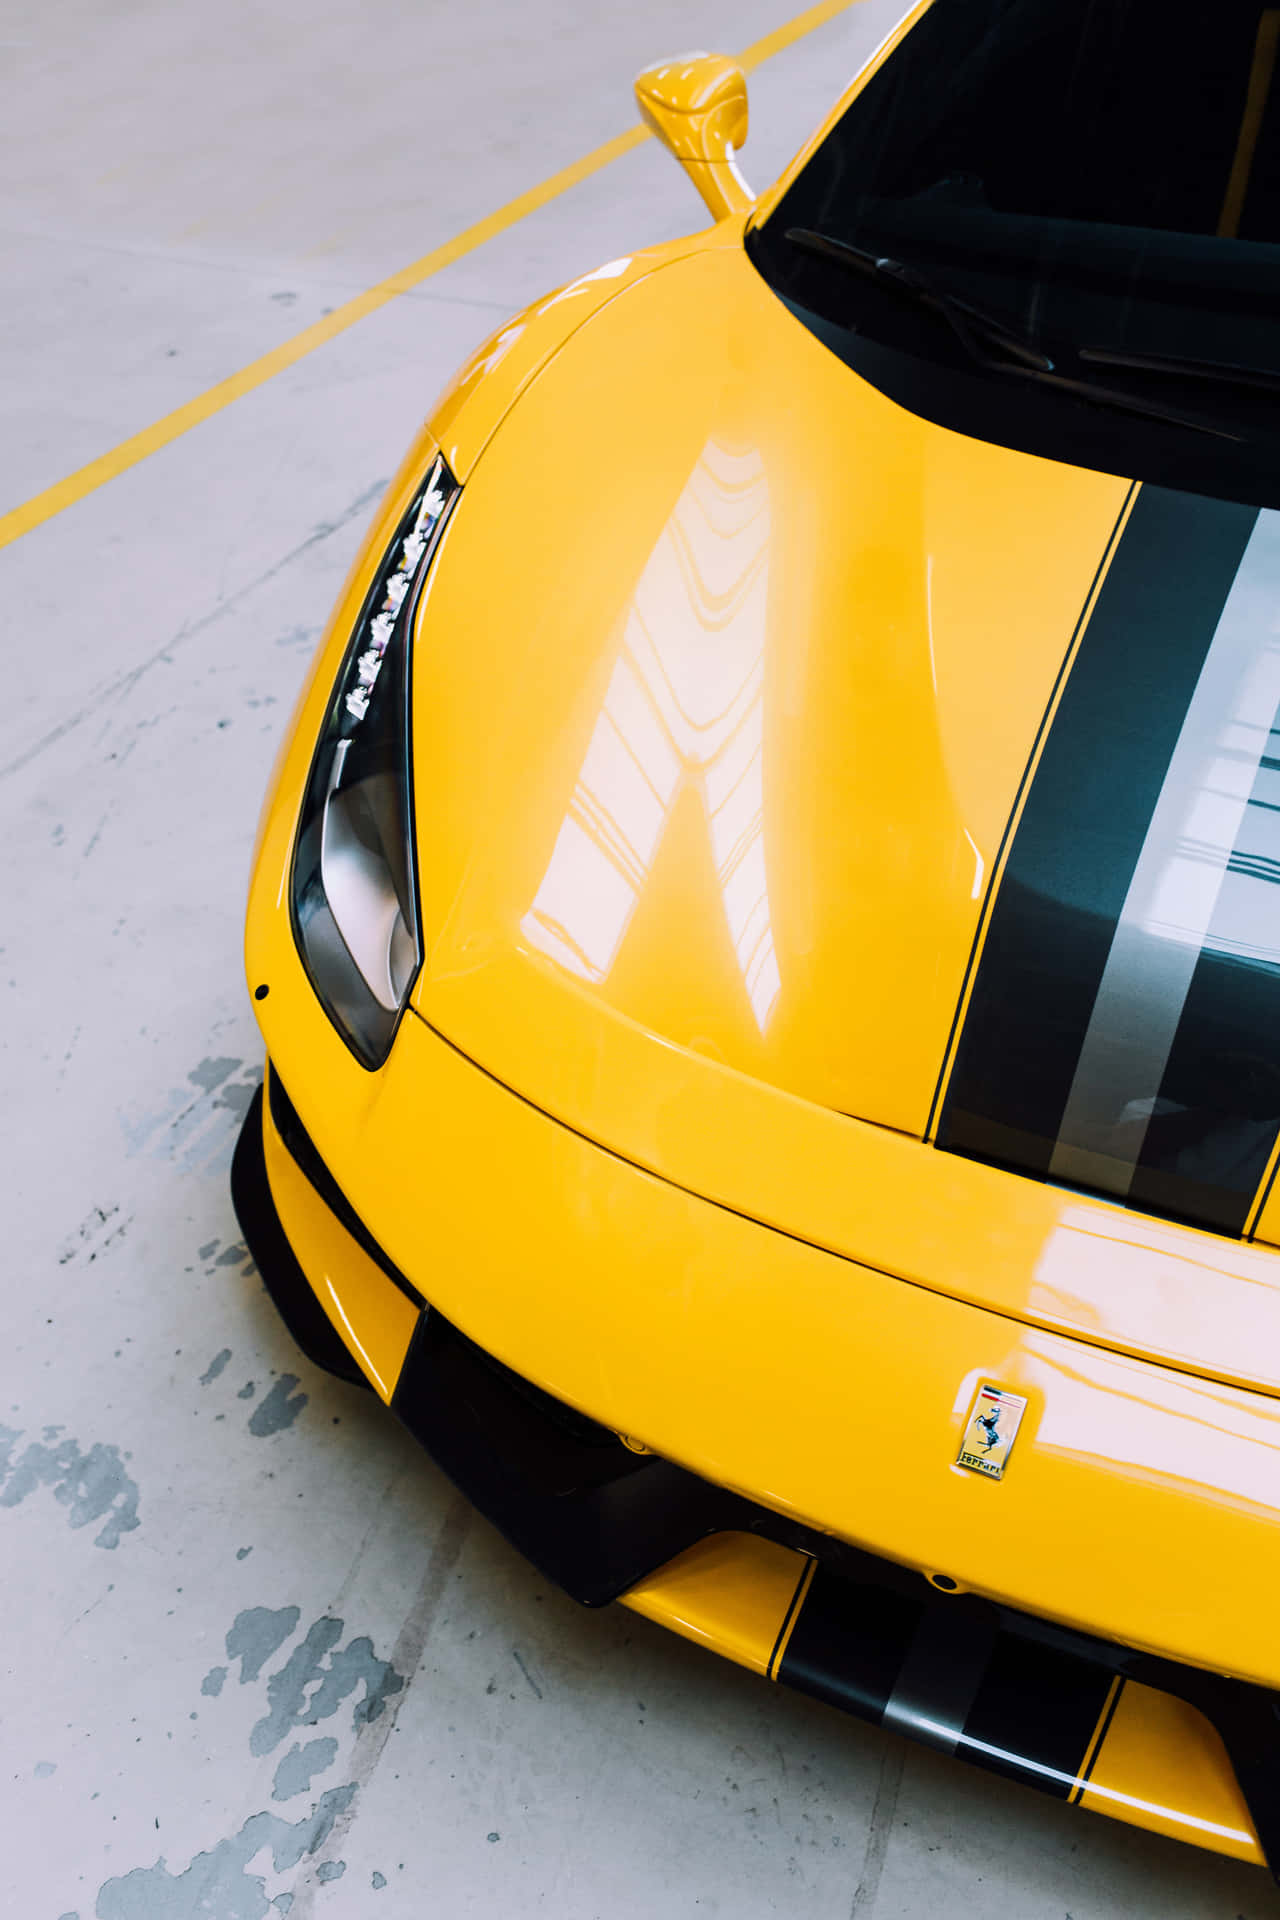 Luxury Impact: An Elegant Ferrari On An Open Road